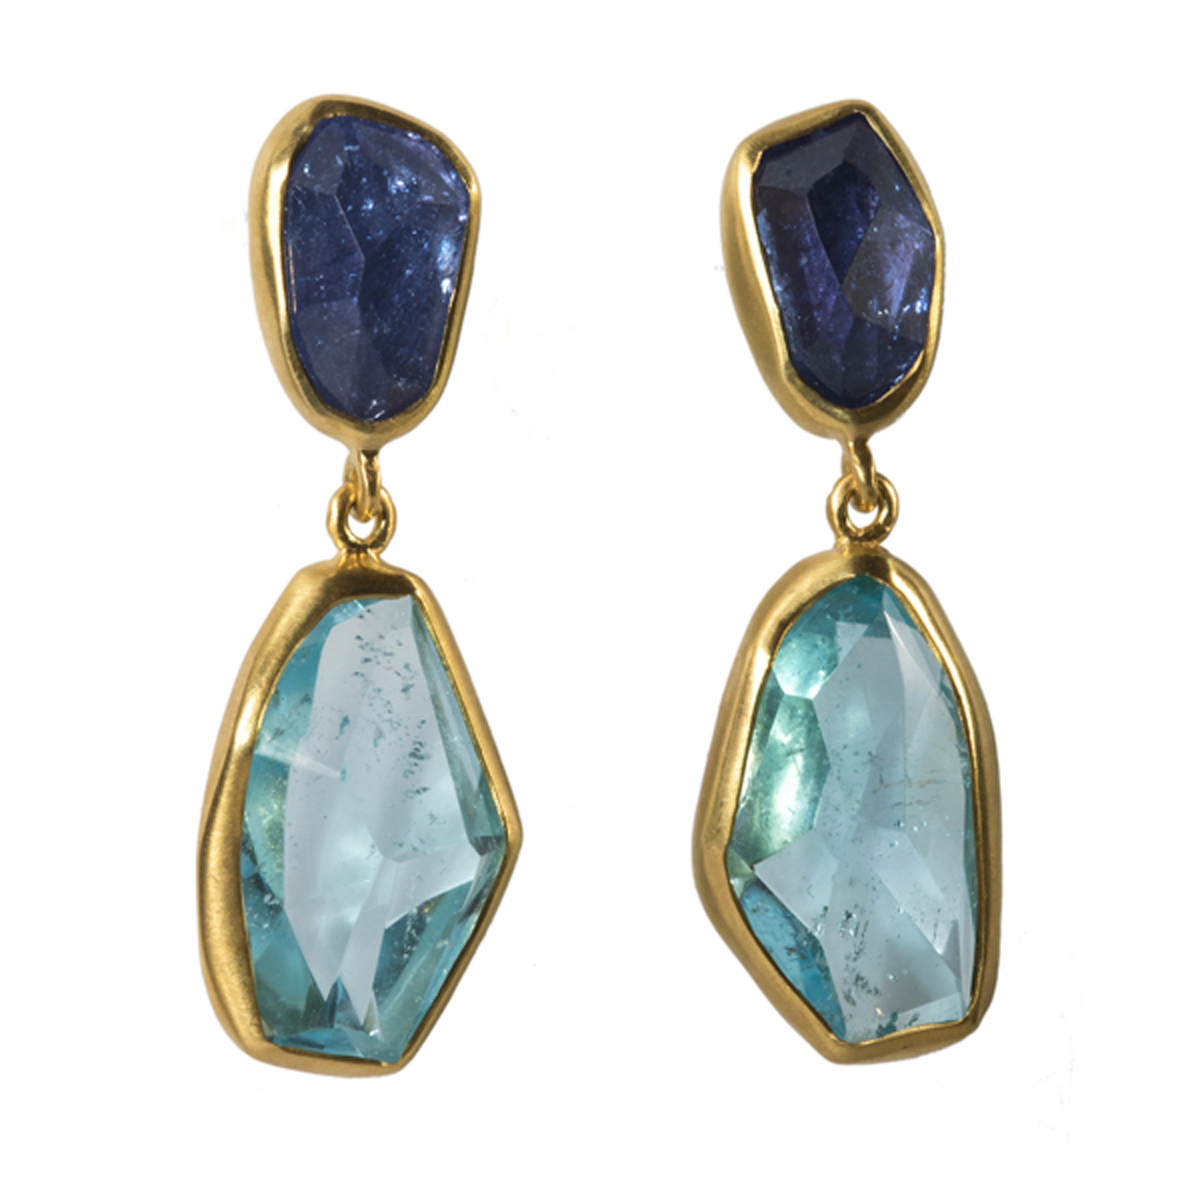 Tanzanite, Aquamarine & Gold earrings